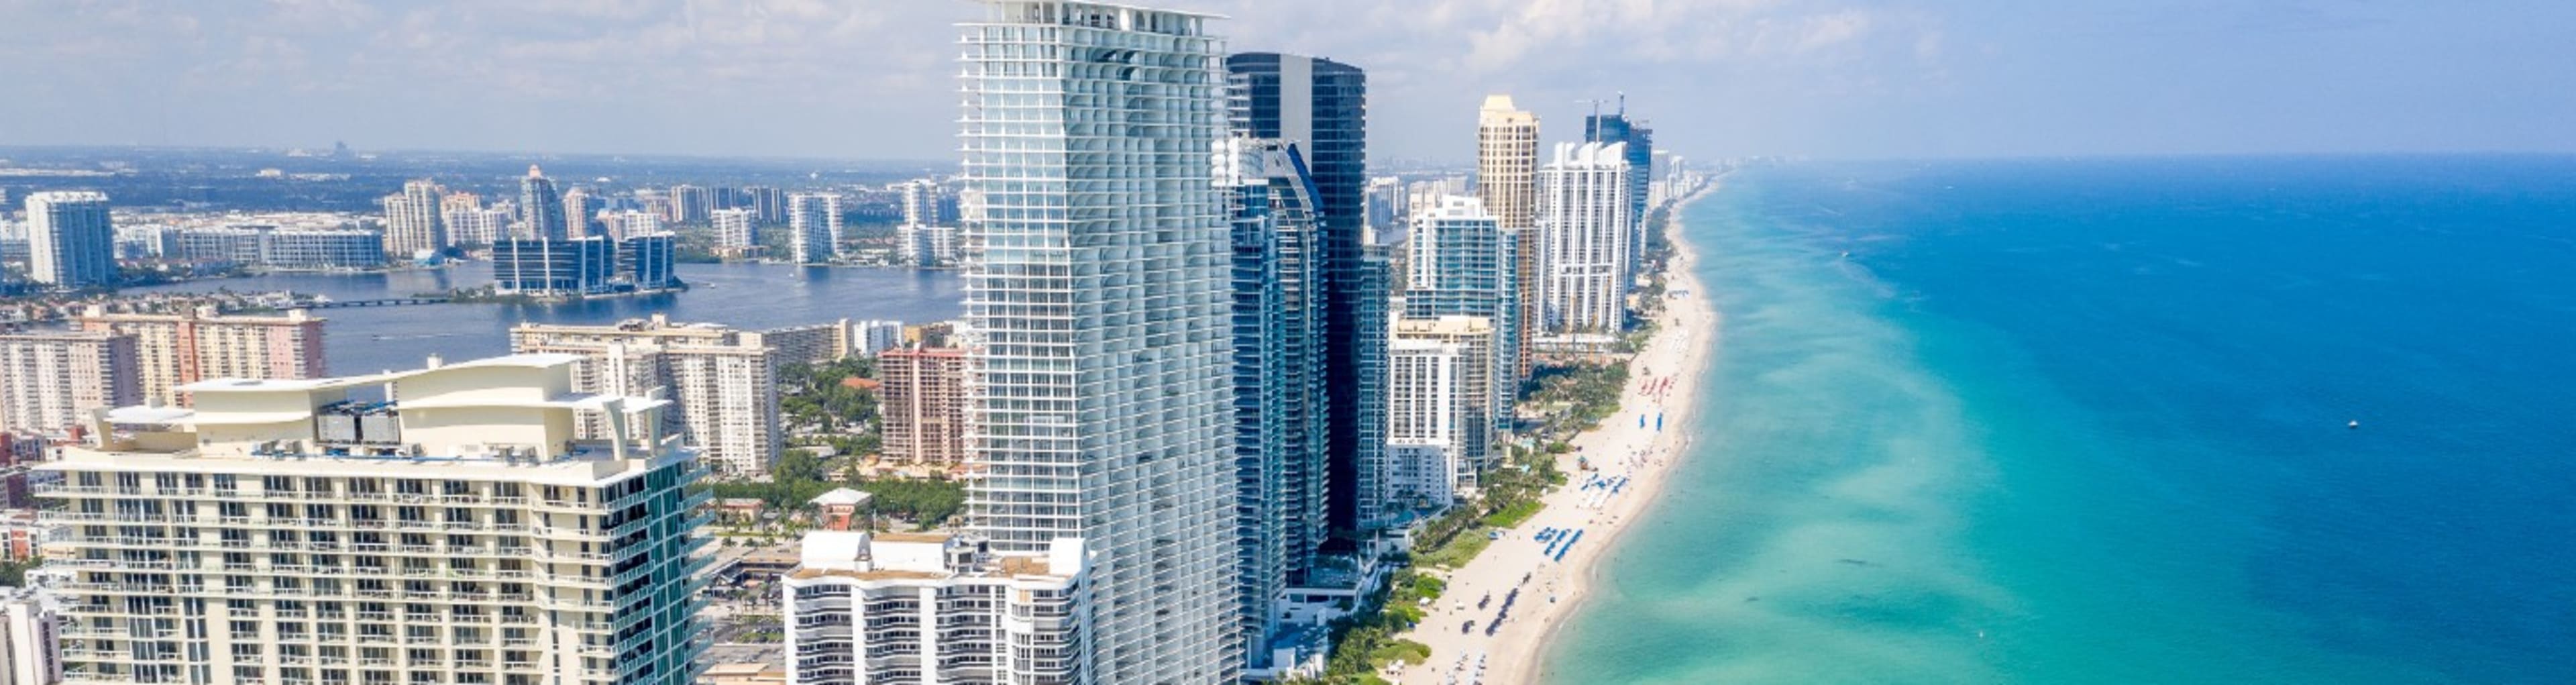 Explore Miami with Go City